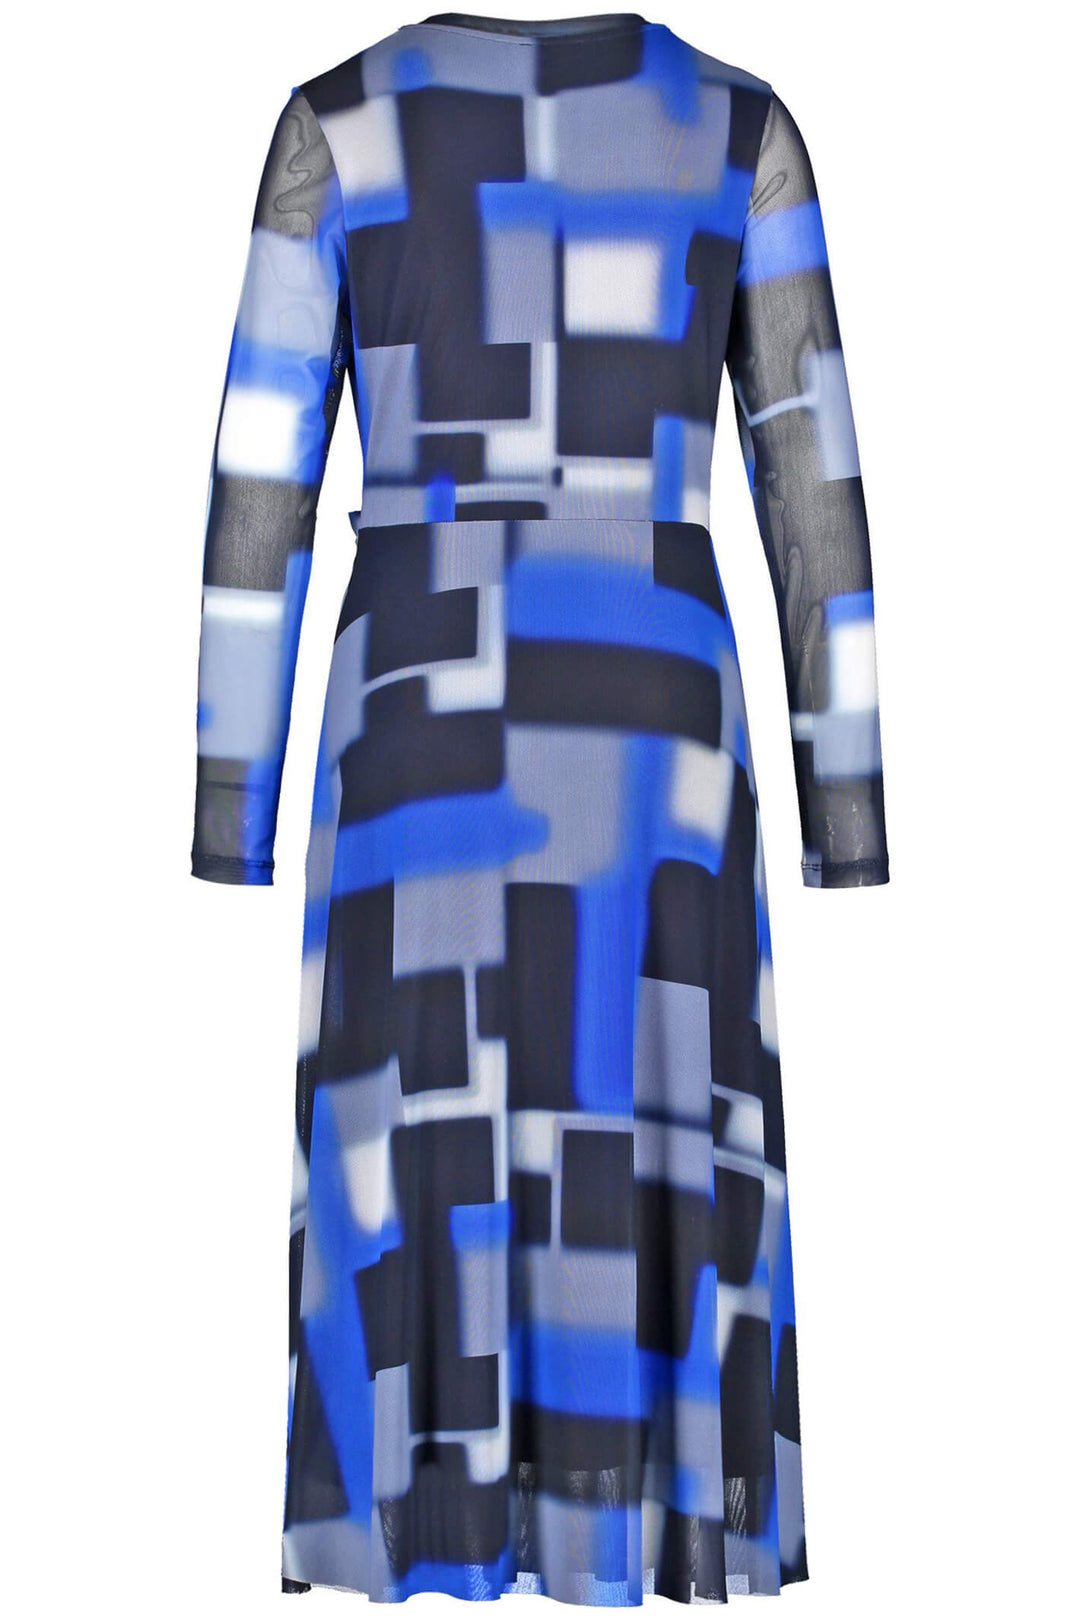 Gerry Weber 280026 Royal Blue Block Print Mesh Midi Dress - Experience Boutique